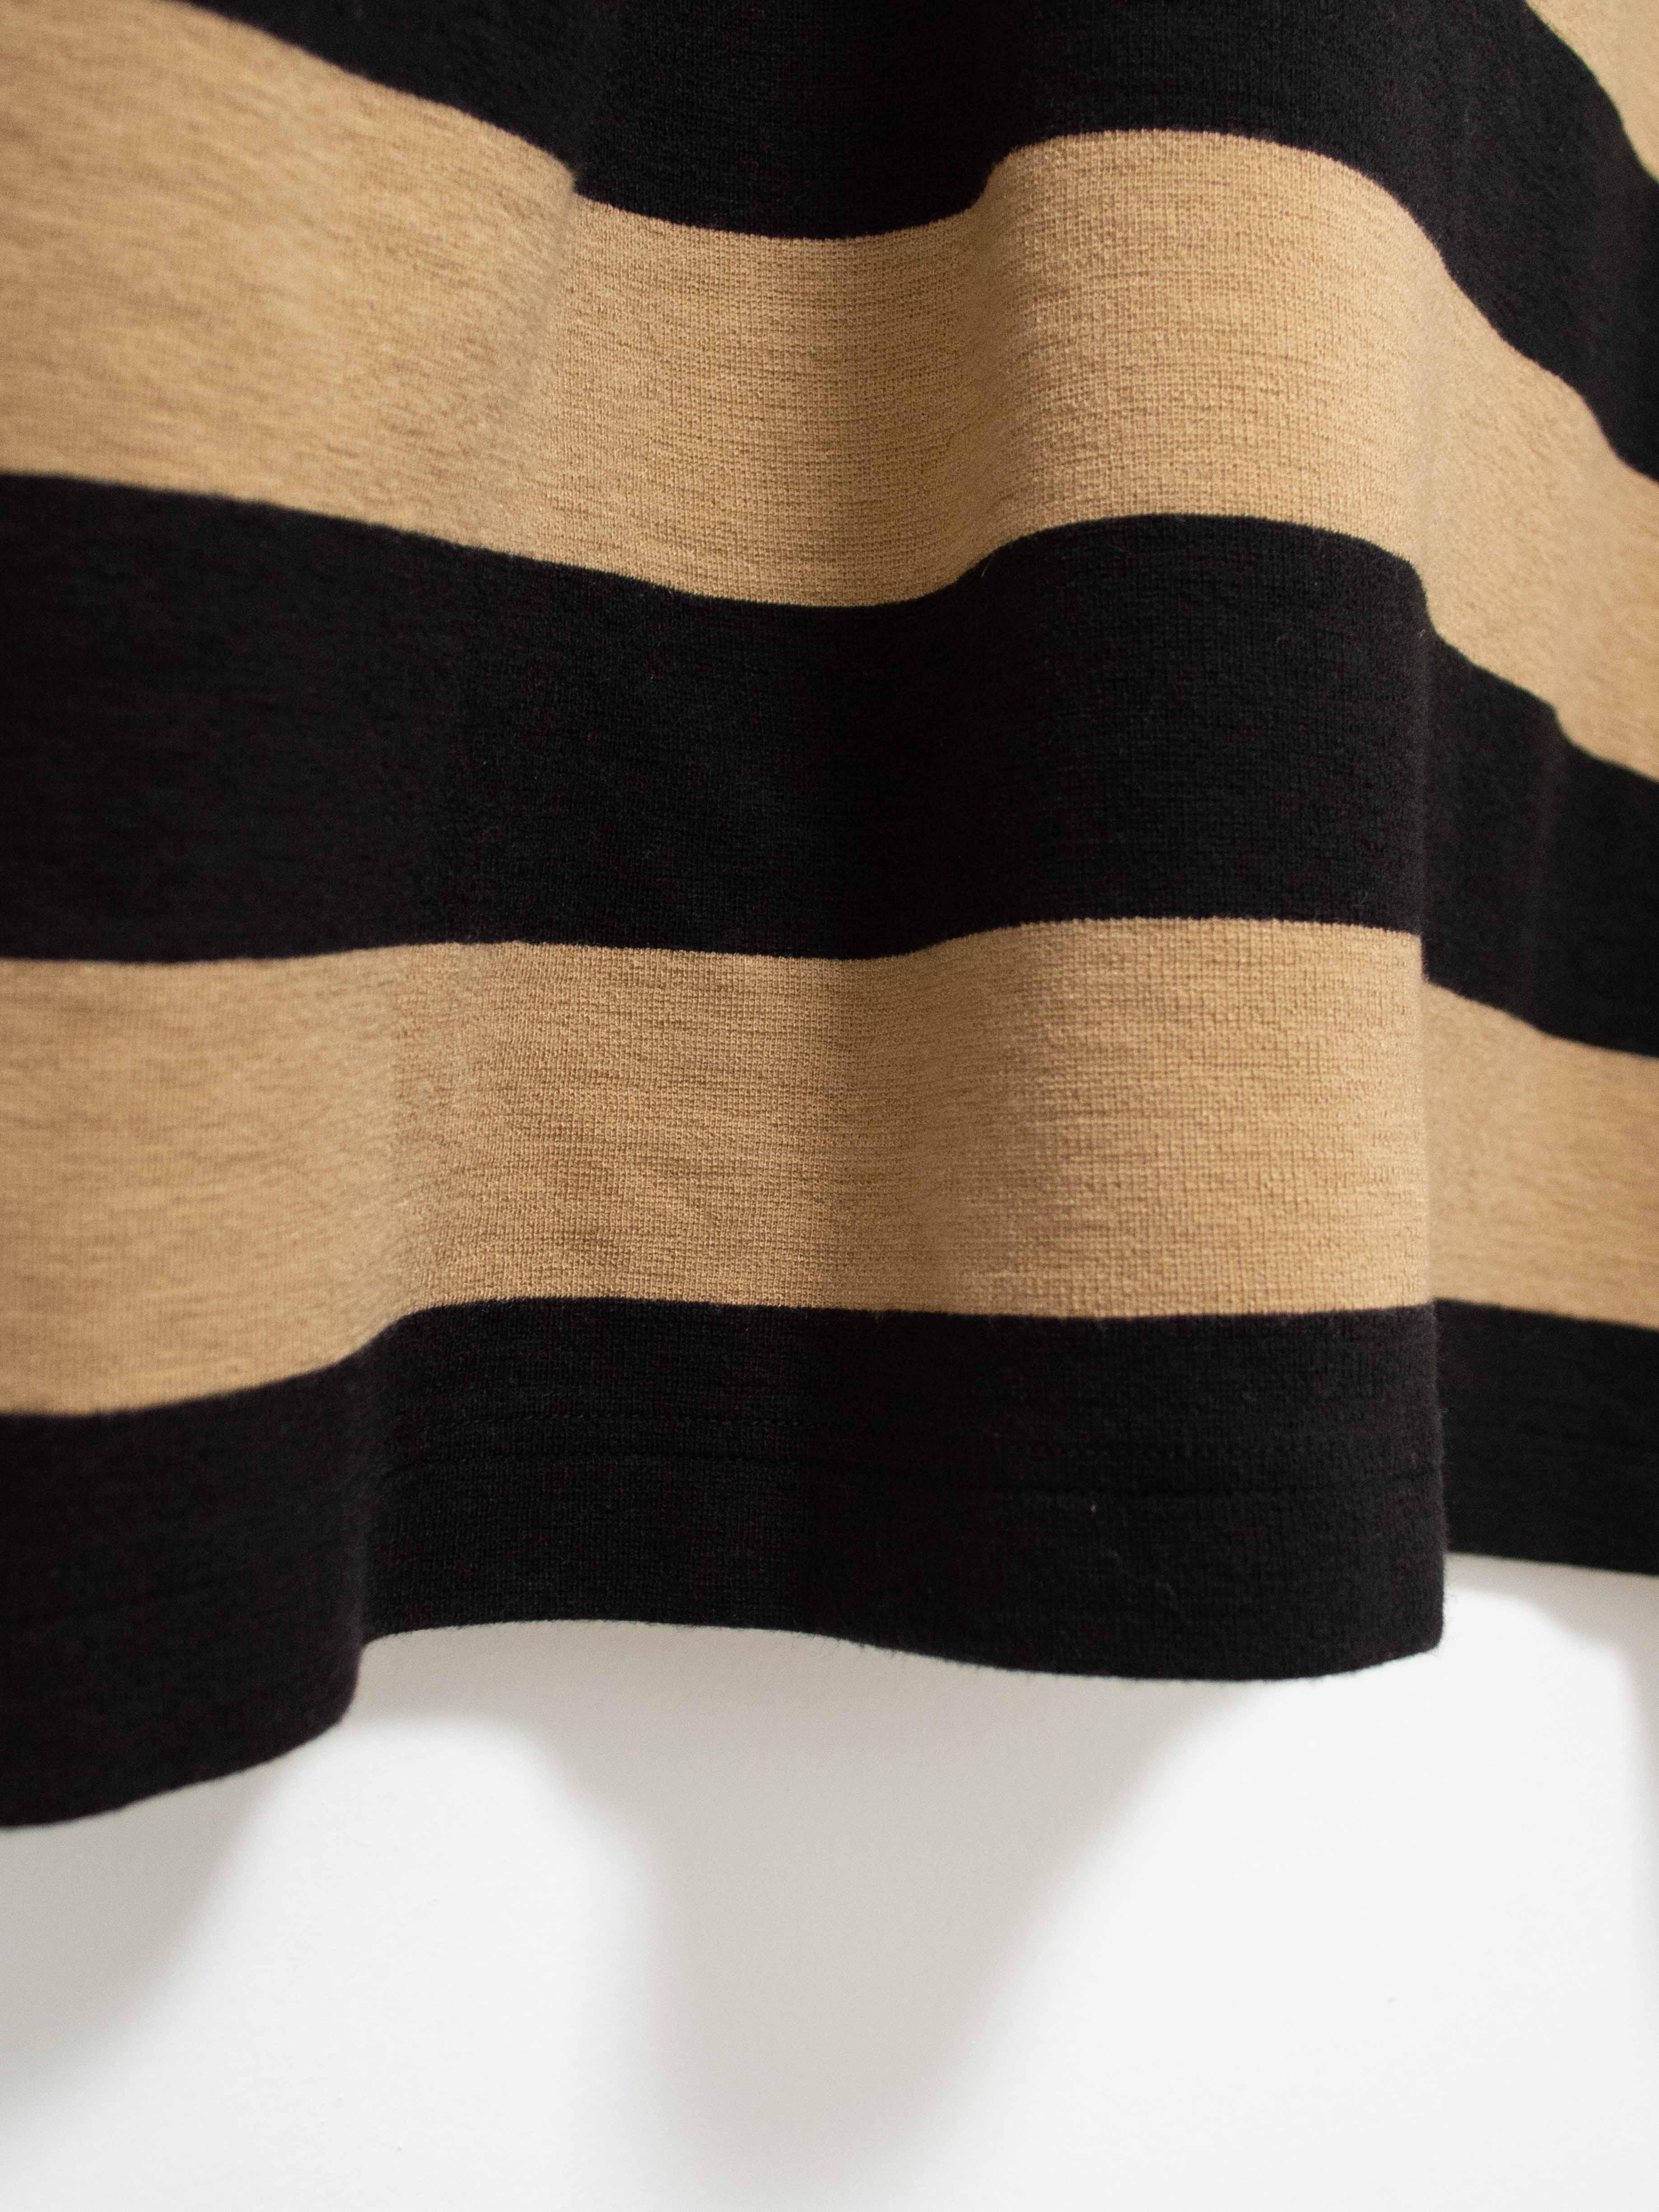 Namu Shop - ts(s) Wool Blend Ponte Jersey Rugby Shirt - Black x Beige